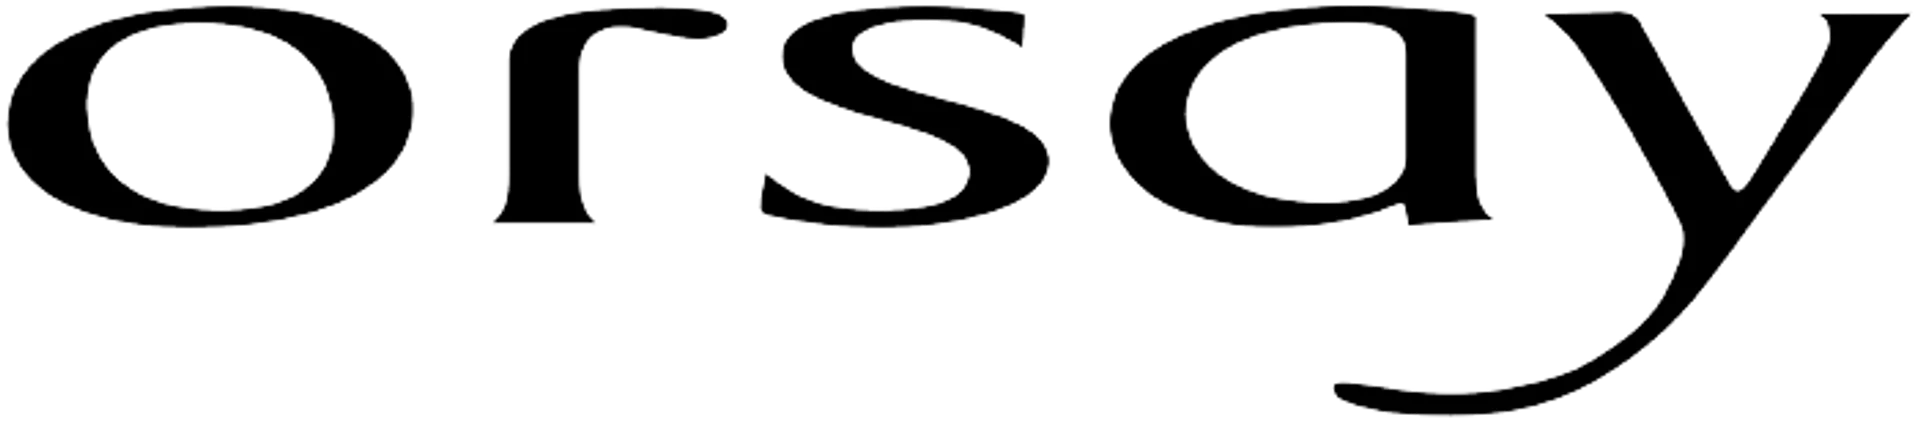 ORSAY logo of current flyer